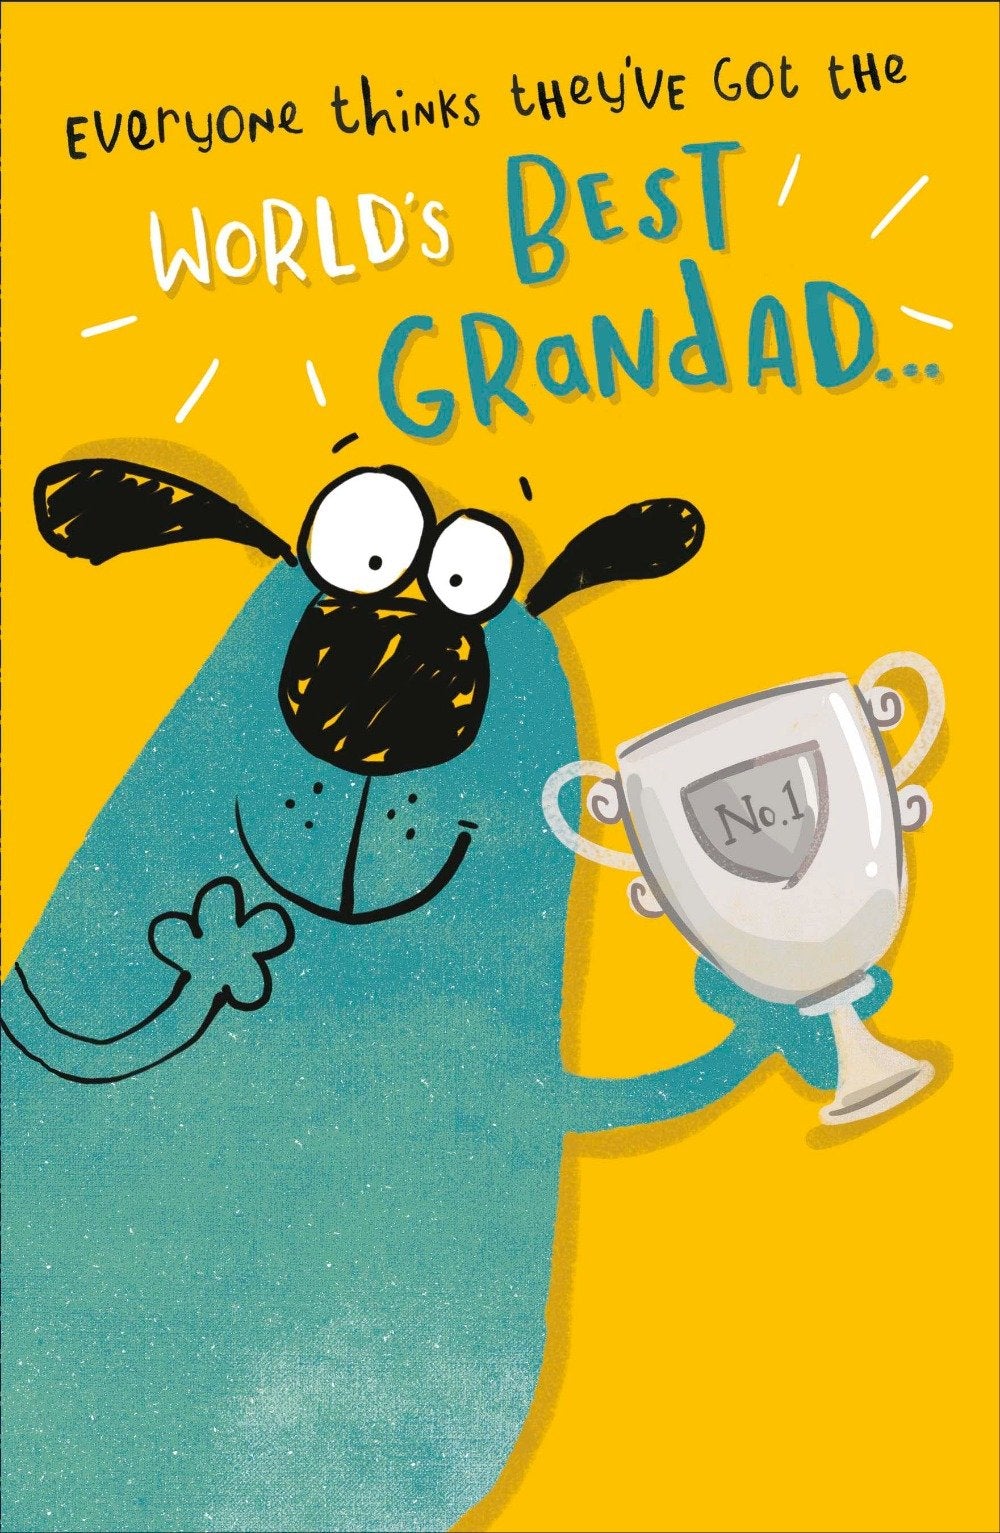 Fathers Day Card - Grandad / A Blue Dog Holding A Silver Trophy